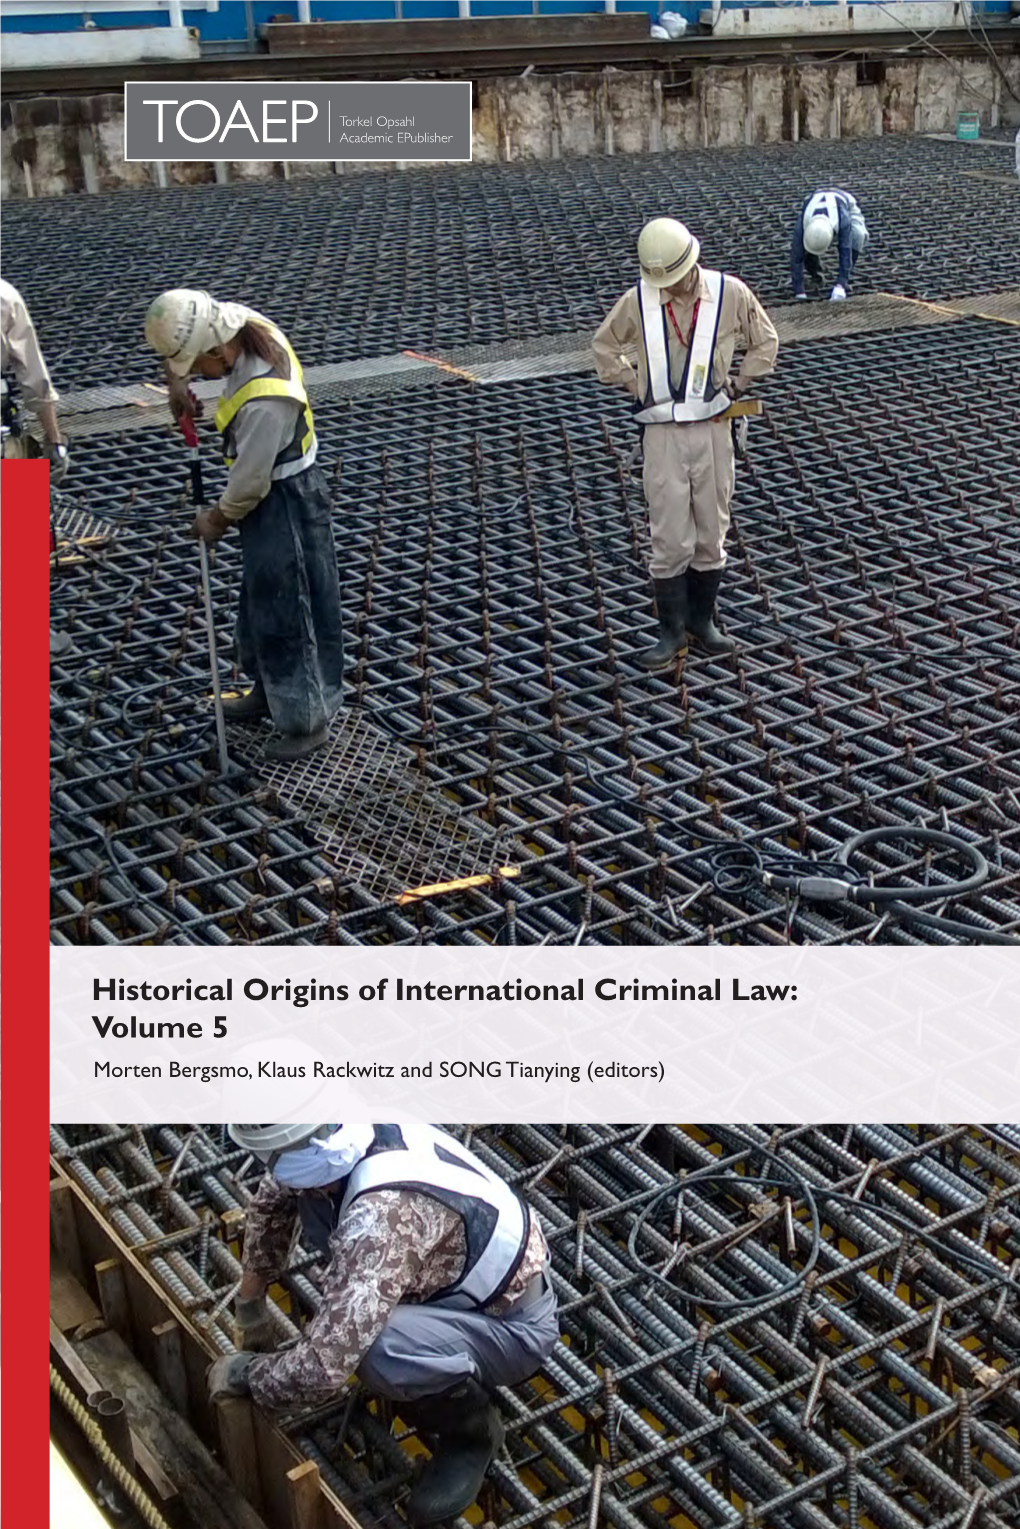 Historical Origins of International Criminal Law: Volume 5 Morten Bergsmo, Klaus Rackwitz and SONG Tianying (Editors)